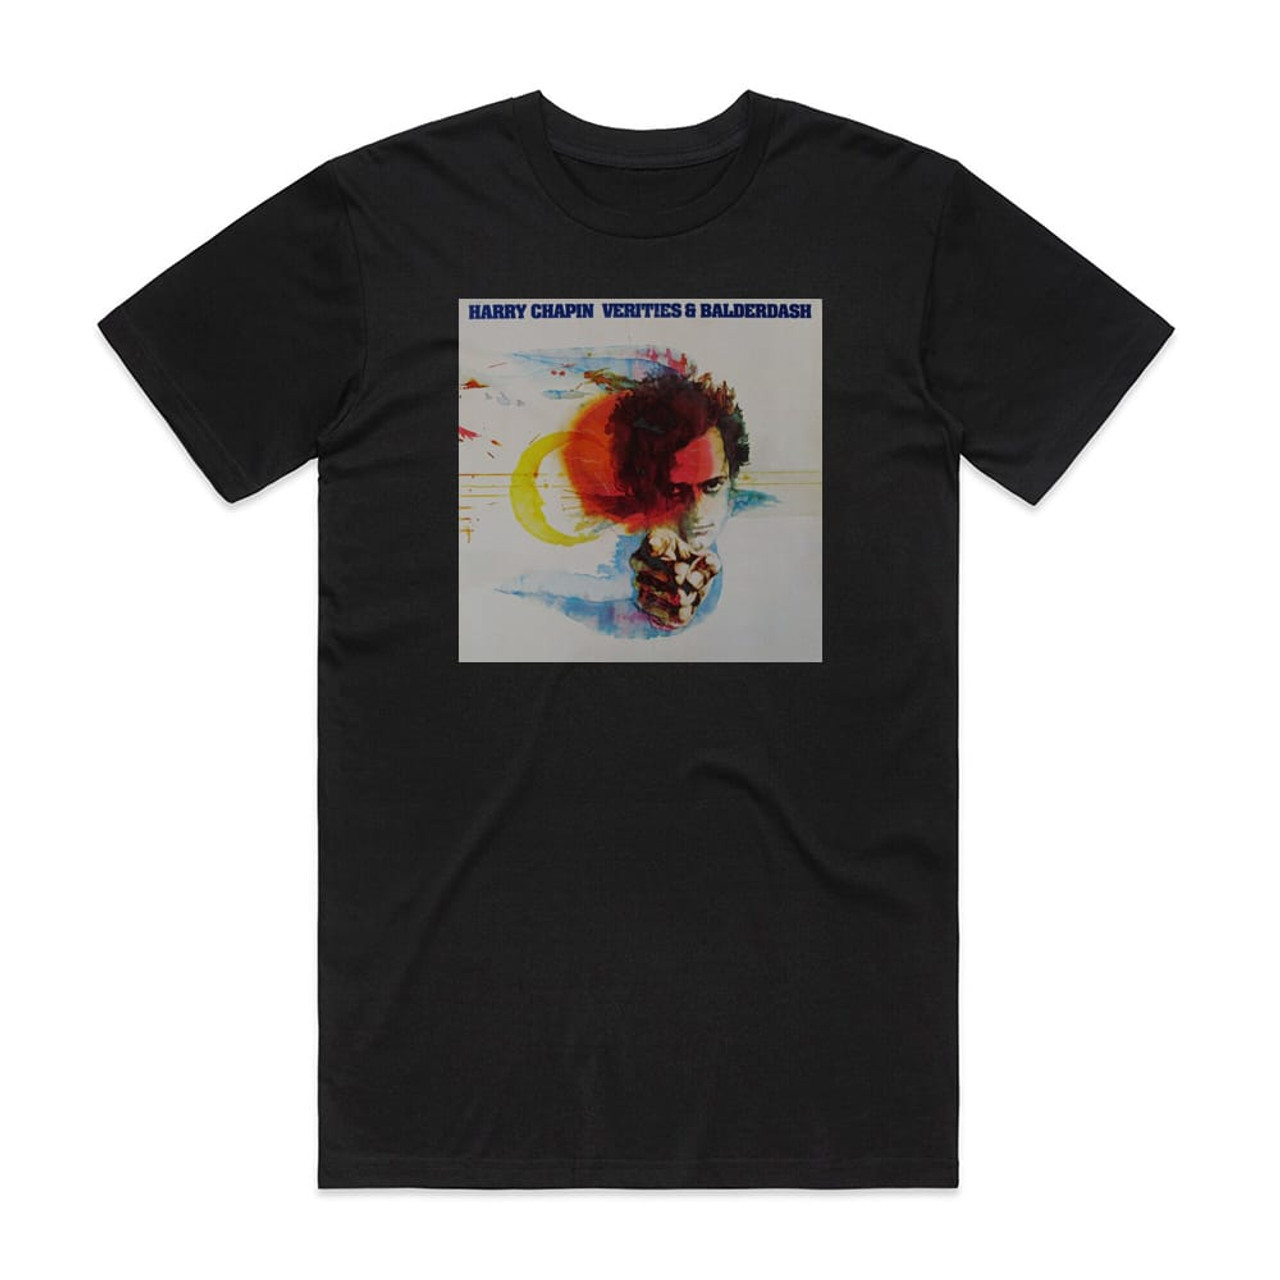 Harry Chapin Verities Balderdash Album Cover T-Shirt Black